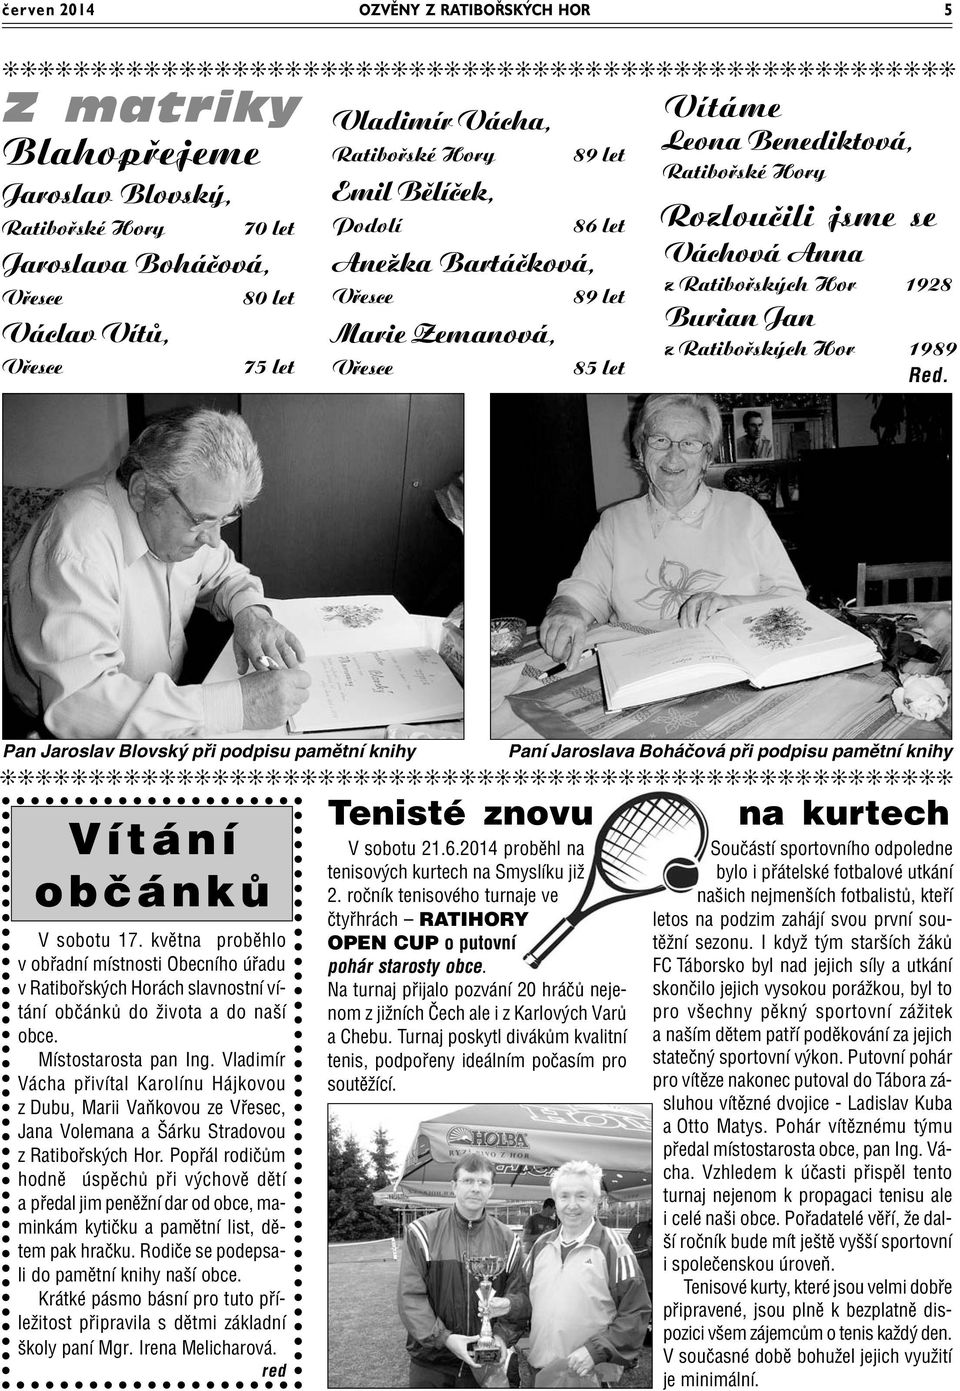 Ratiboøských Hor 1928 Burian Jan z Ratiboøských Hor 1989 Red.